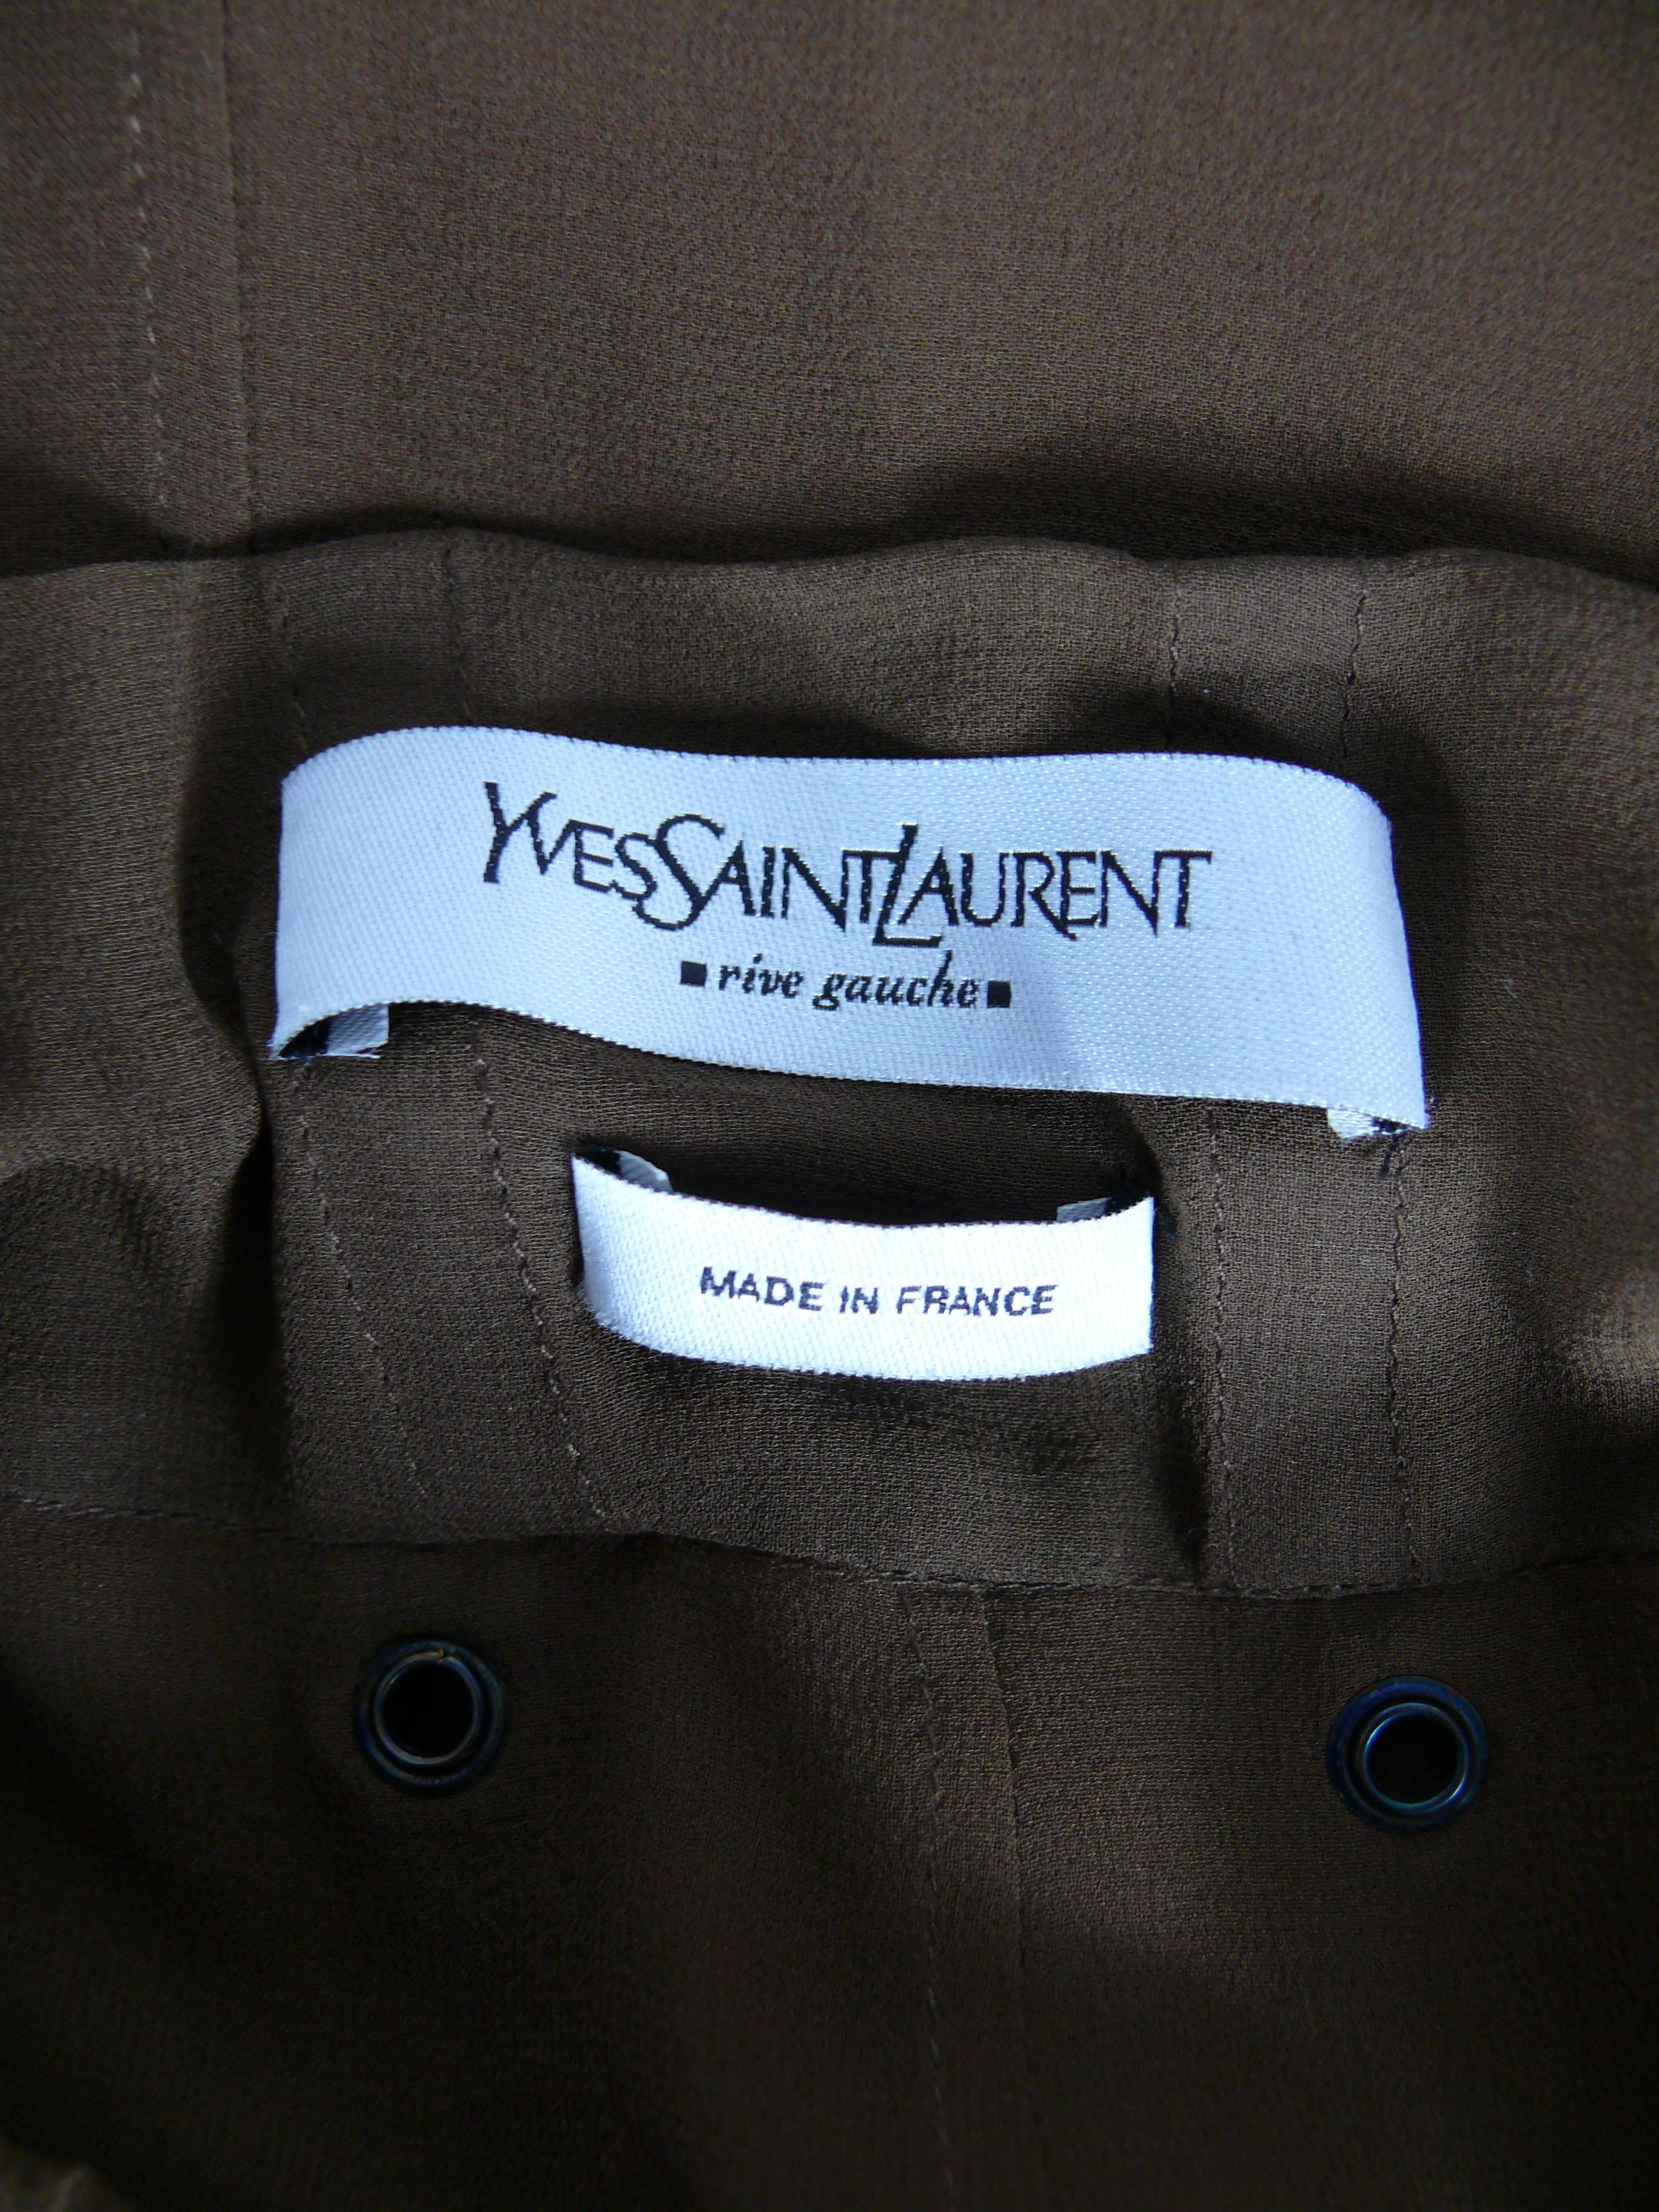 Yves Saint Laurent by Tom Ford Rare Silk Safari Suit 3